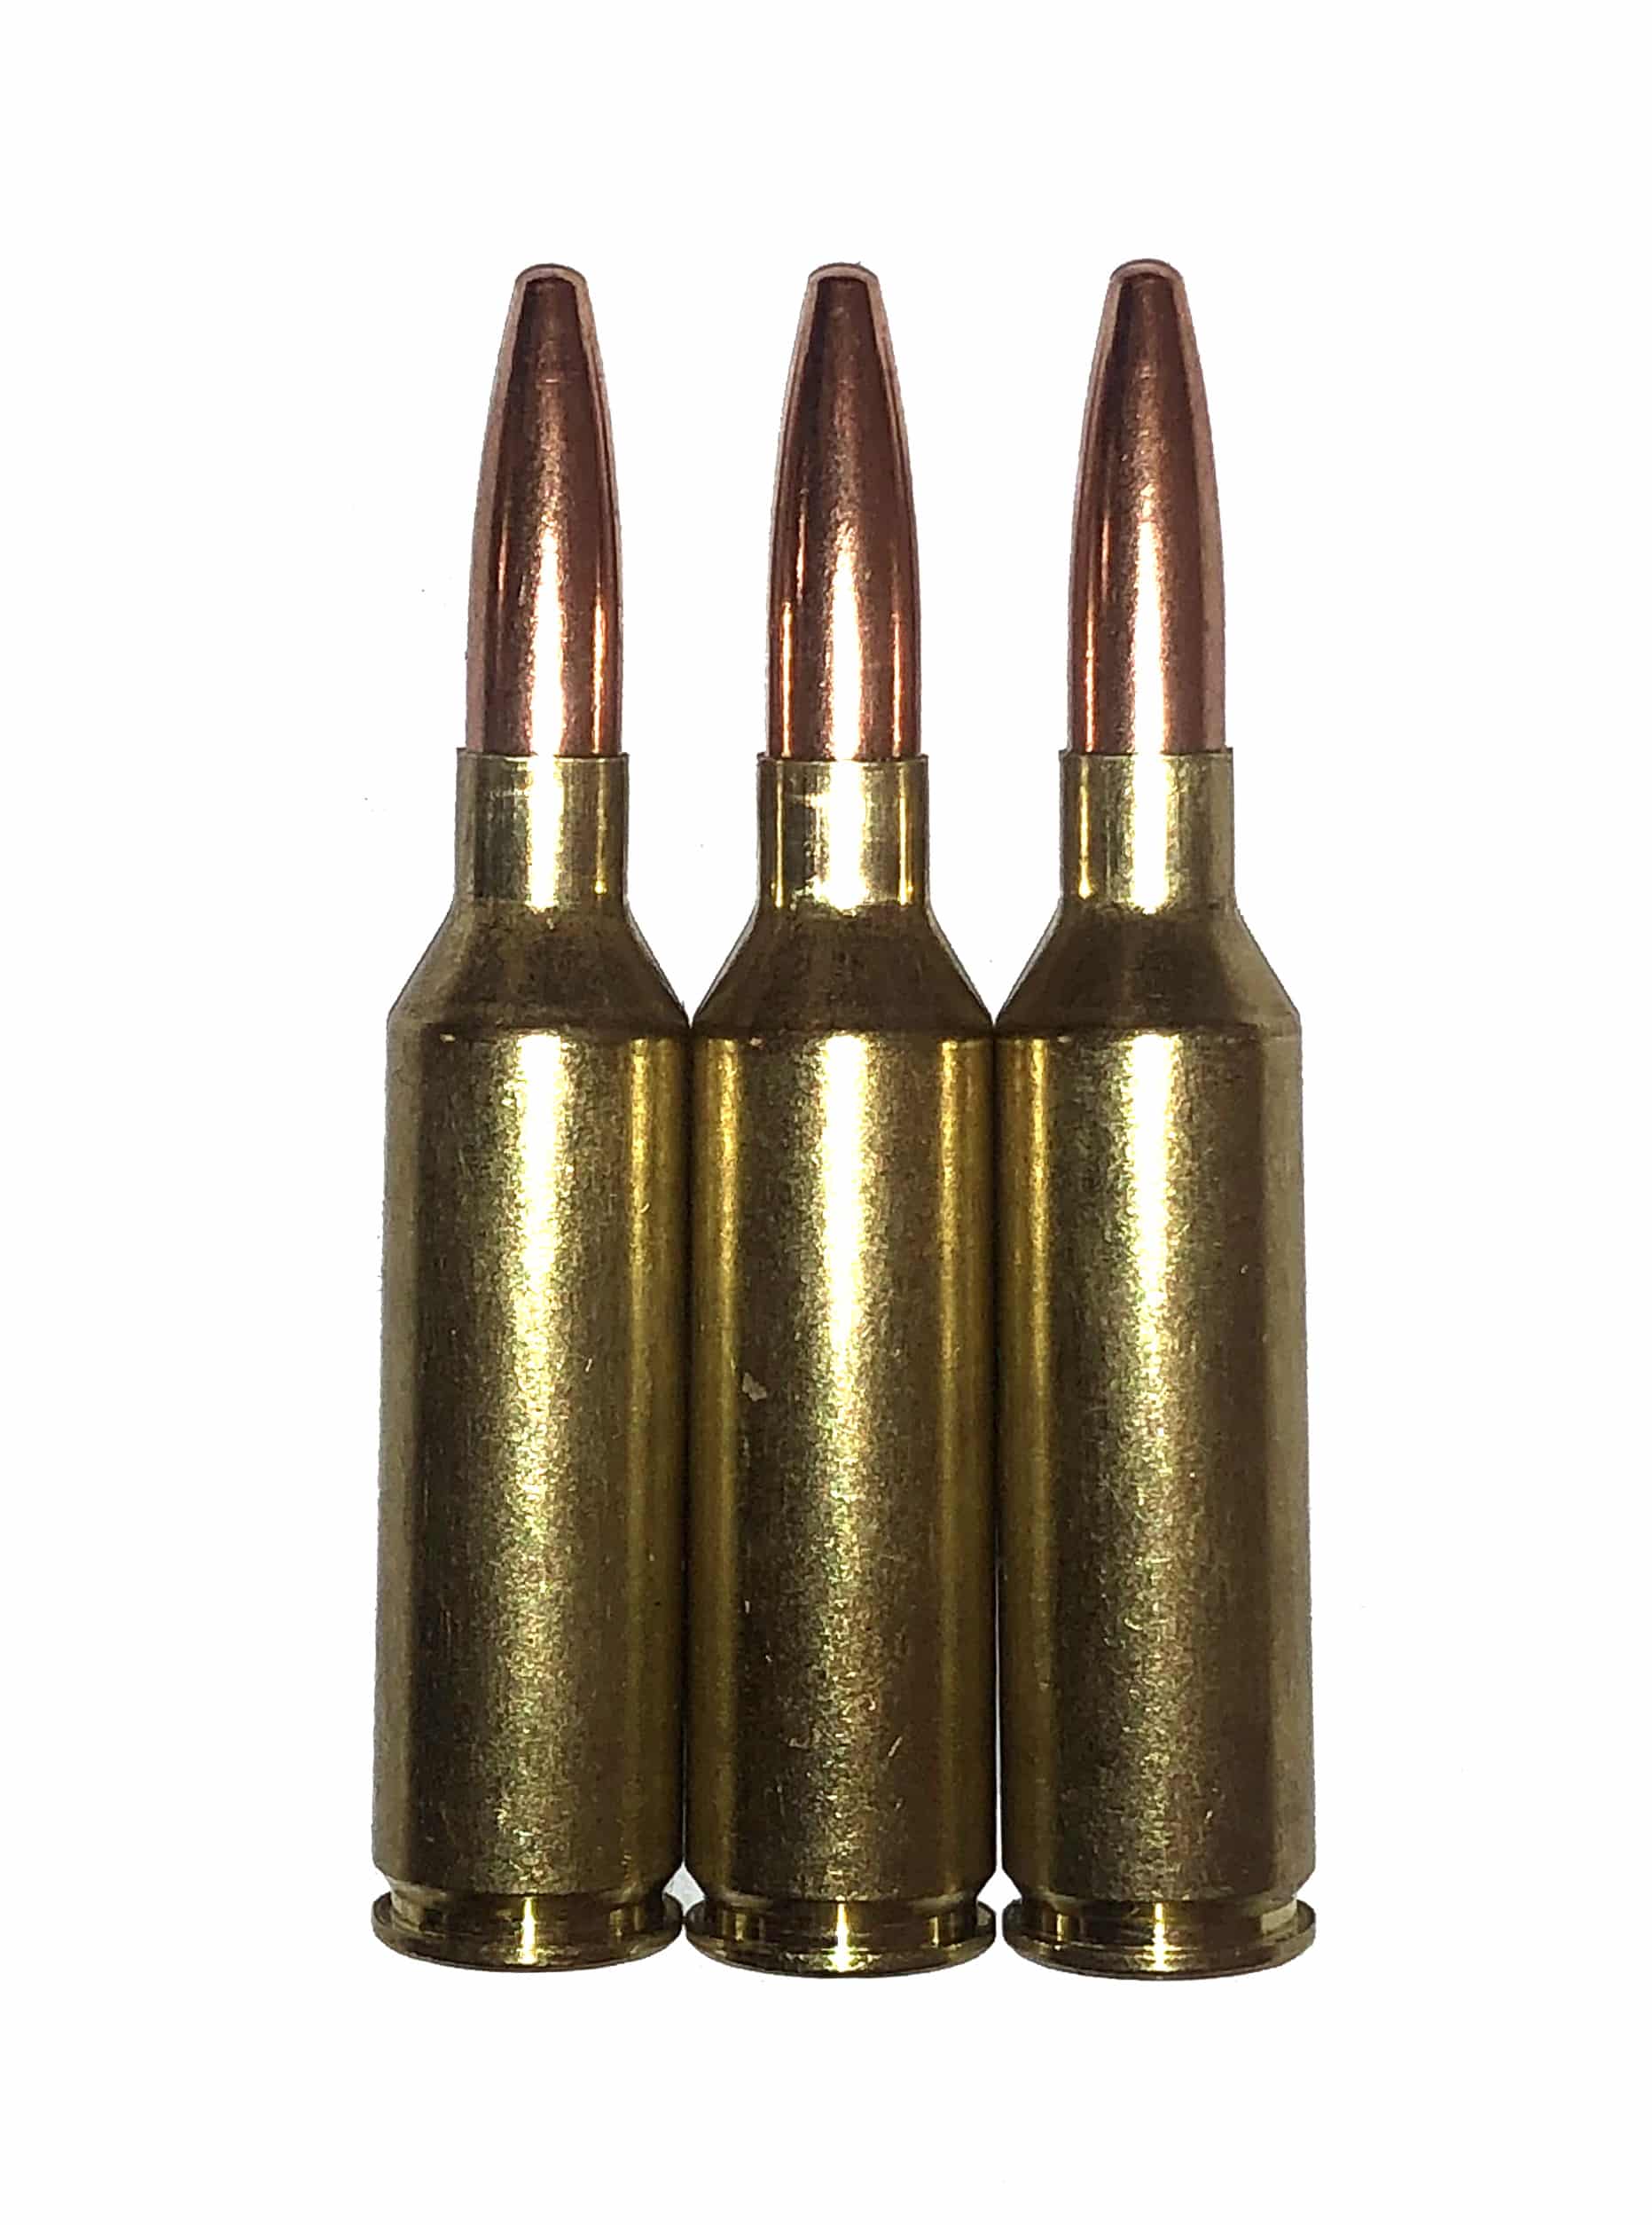 6.5 PRC Dummy Rounds Snap Caps Fake Bullets Precision Rifle Cartridge J&M Spec INERT